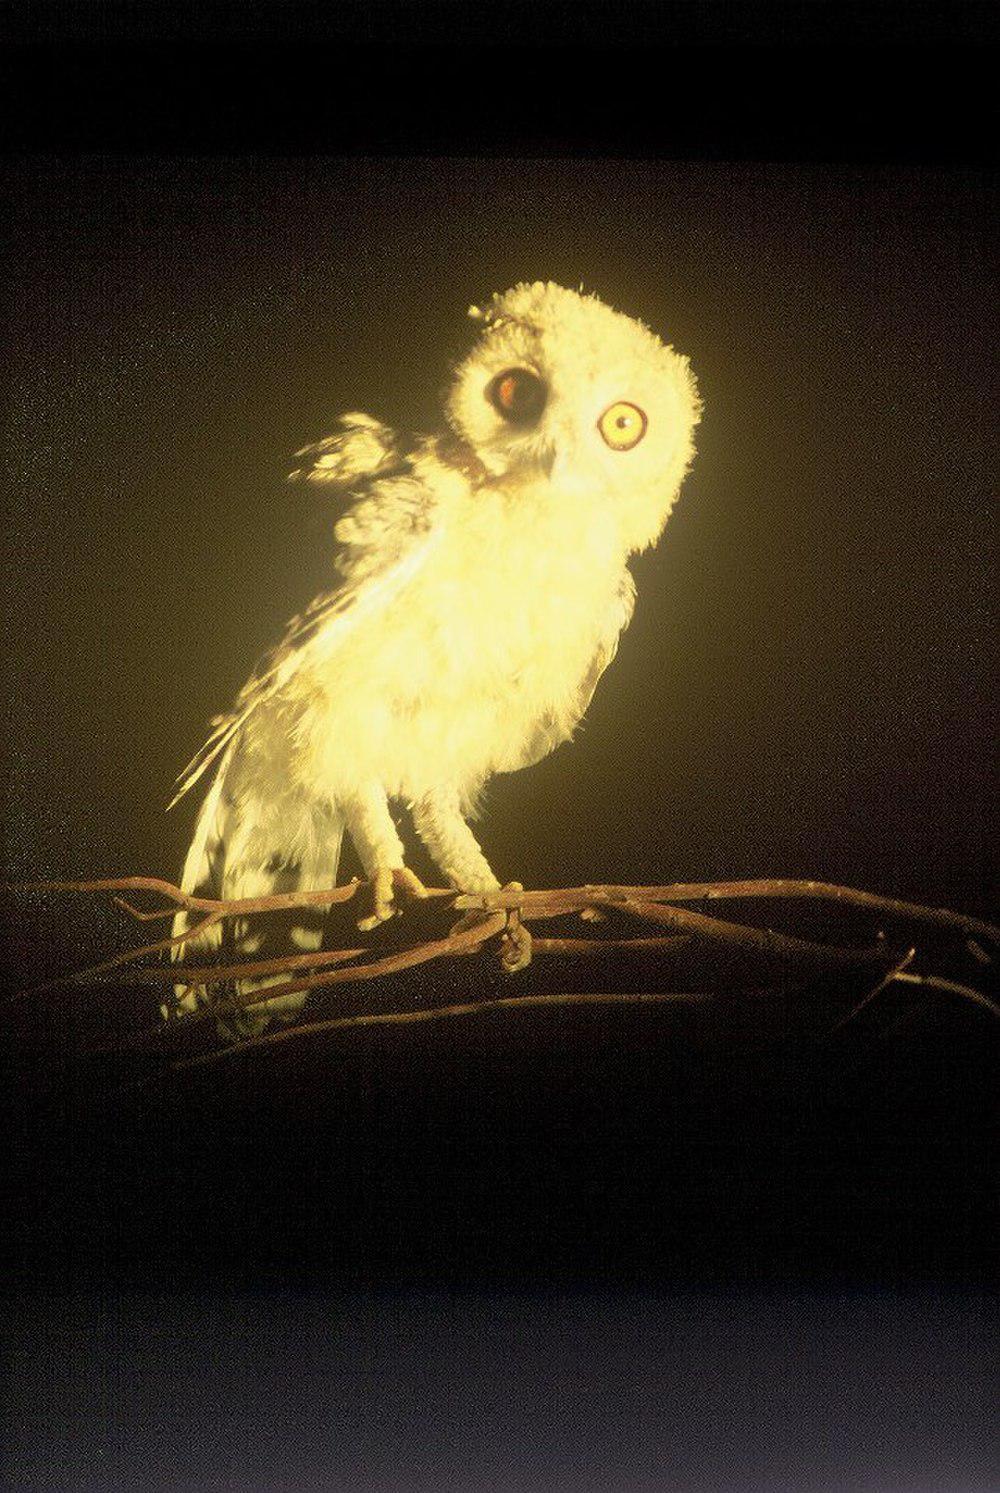 漠鸮 / Desert Owl / Strix hadorami